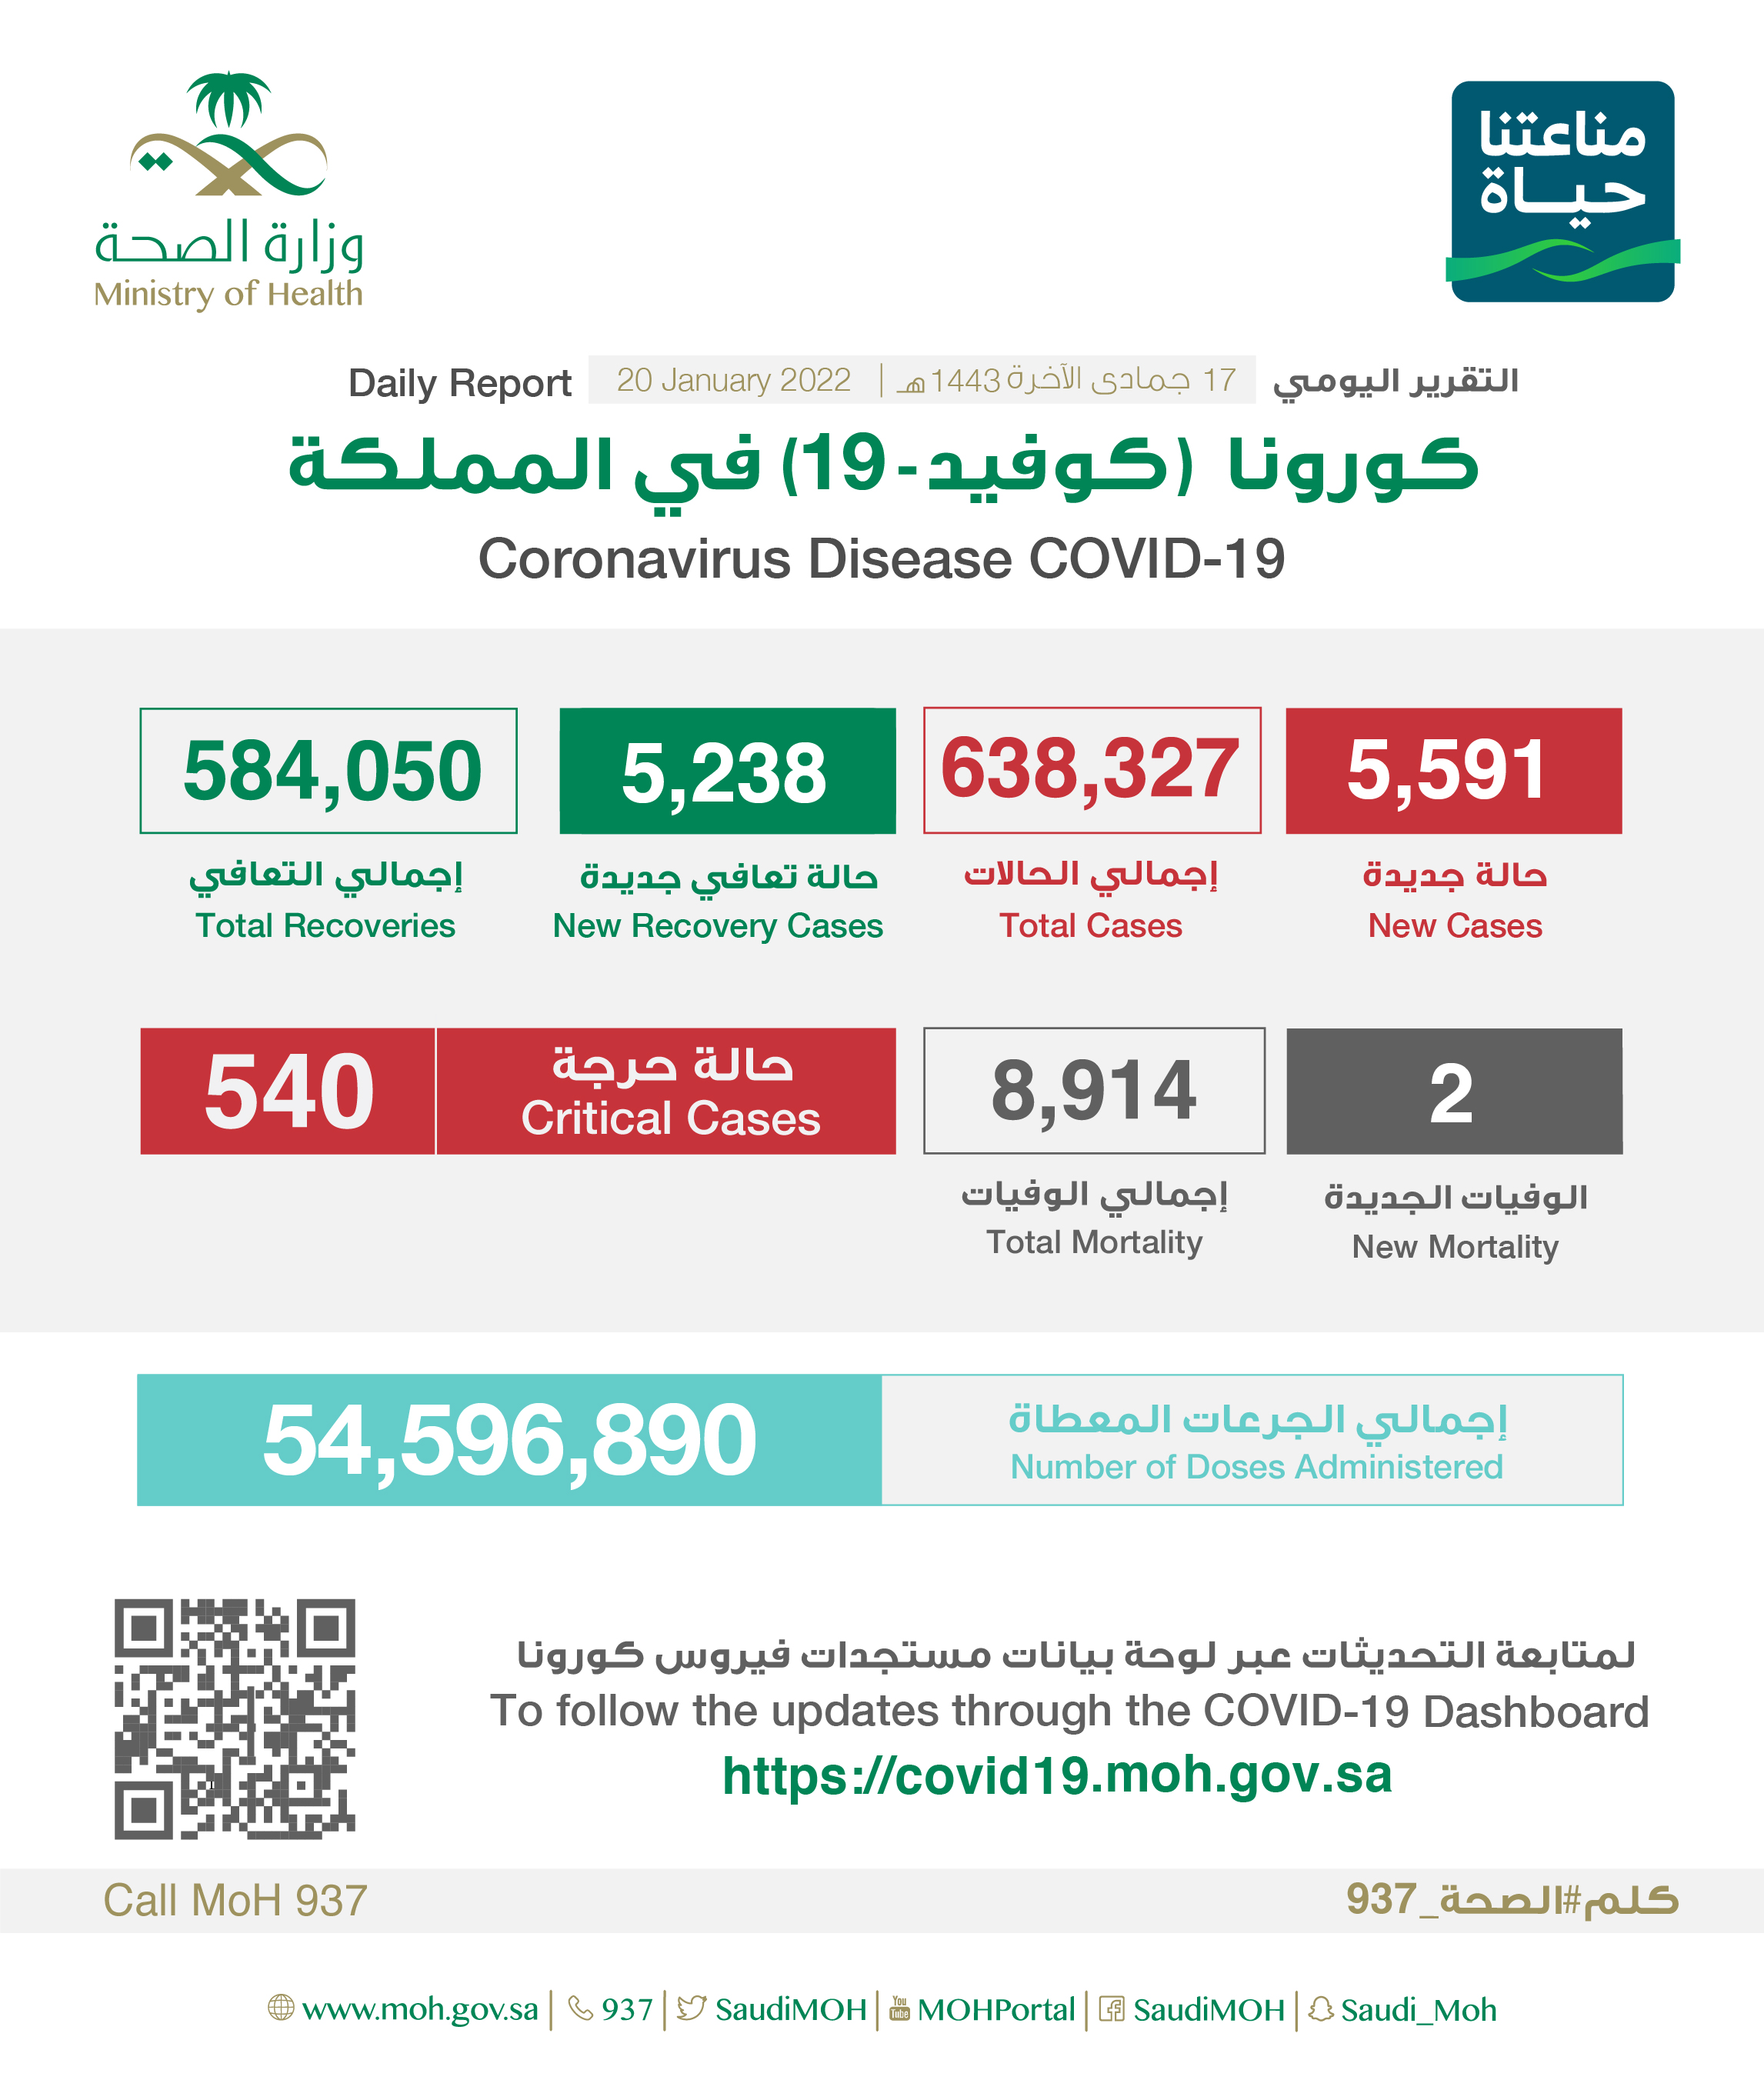 Saudi Arabia Coronavirus : Total Cases : 638,327, New Cases : ,5,591, Cured : 584,050, Deaths: 8,914, Active Cases : 45,363